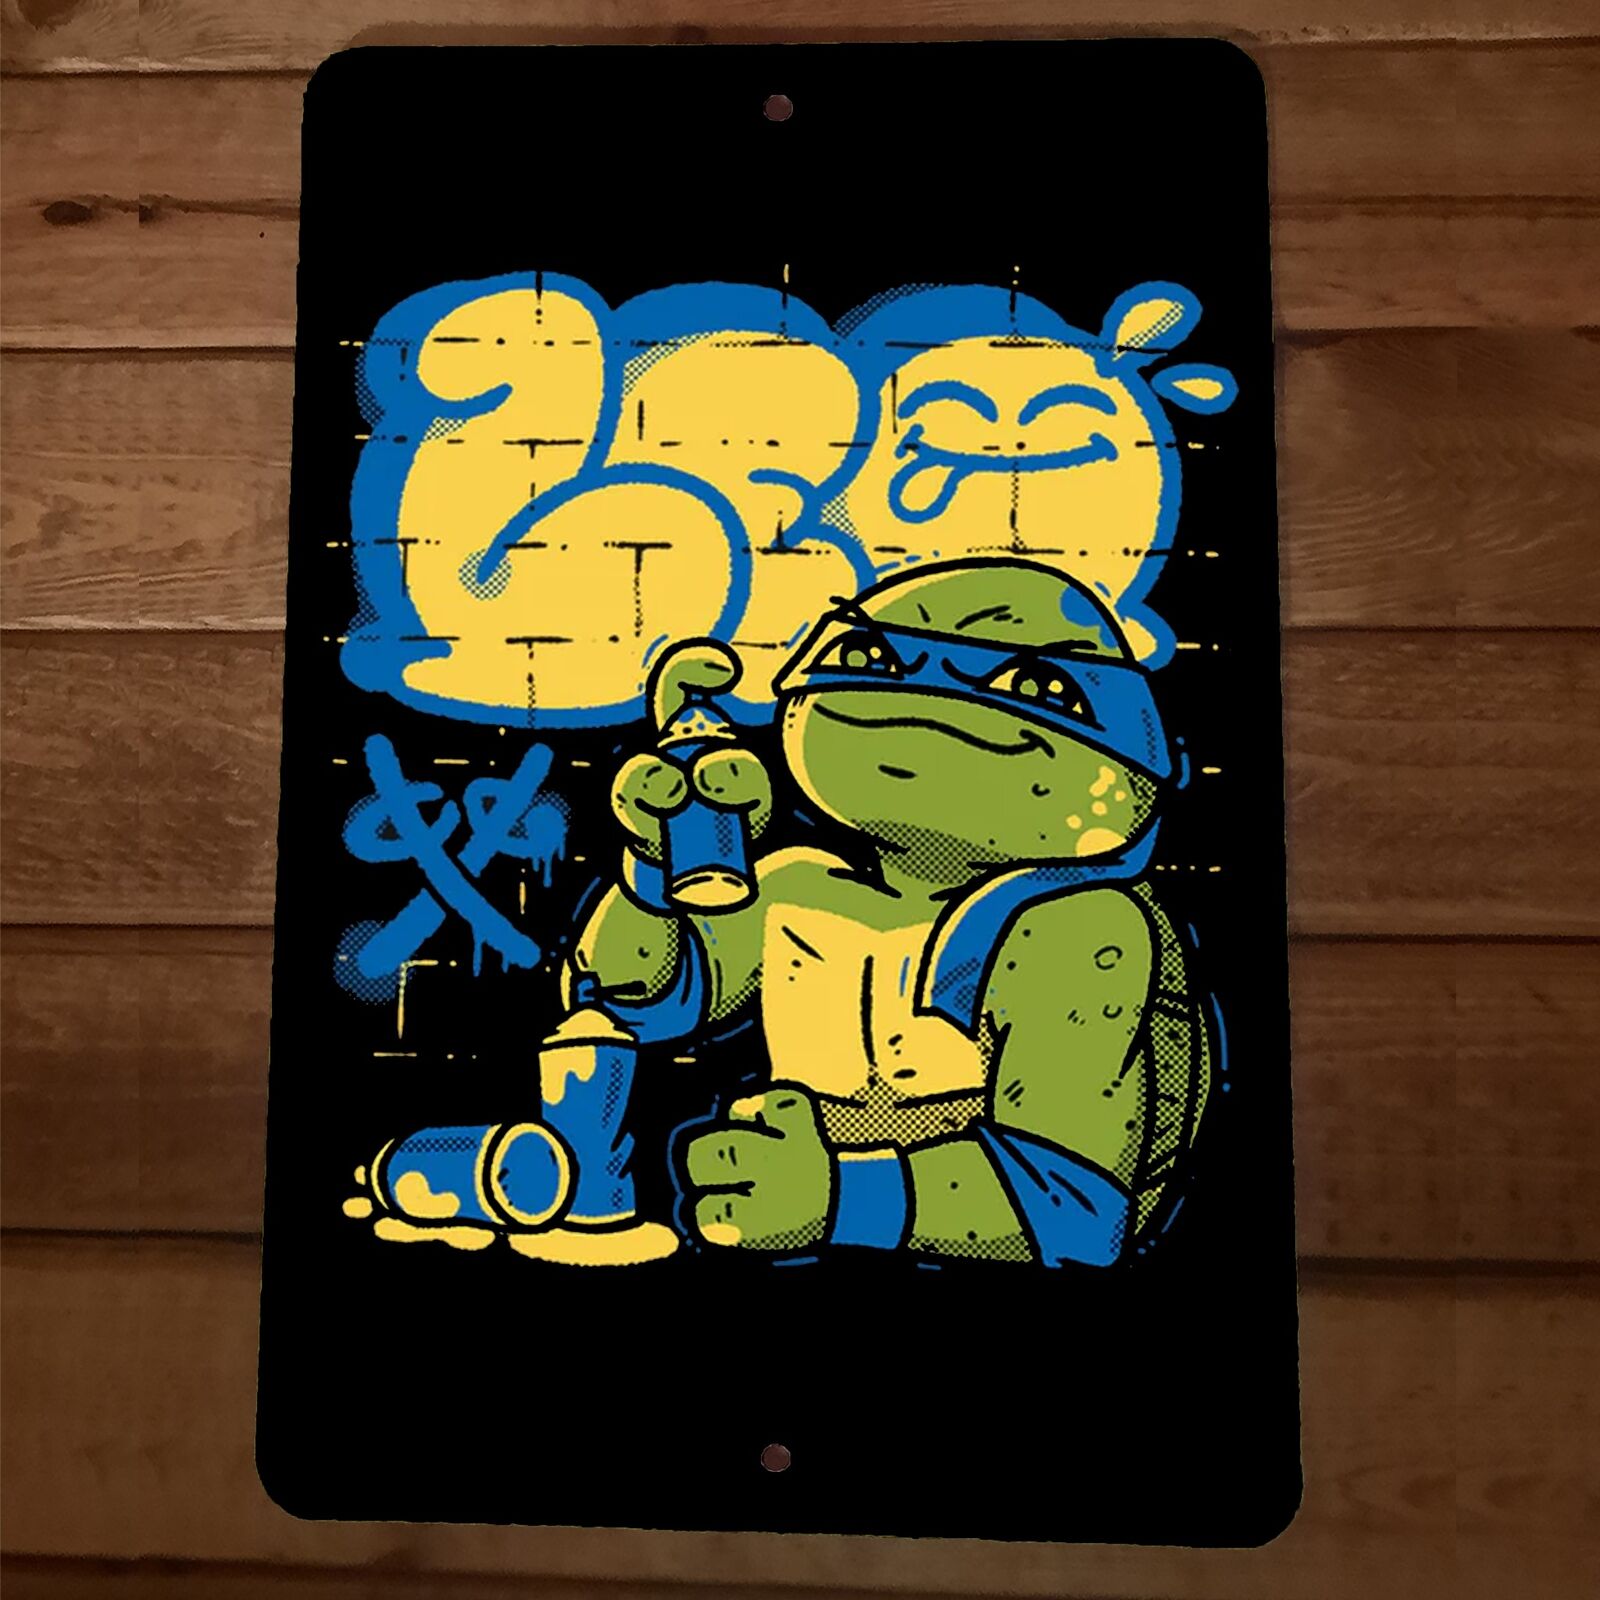 ninja turtles graffiti